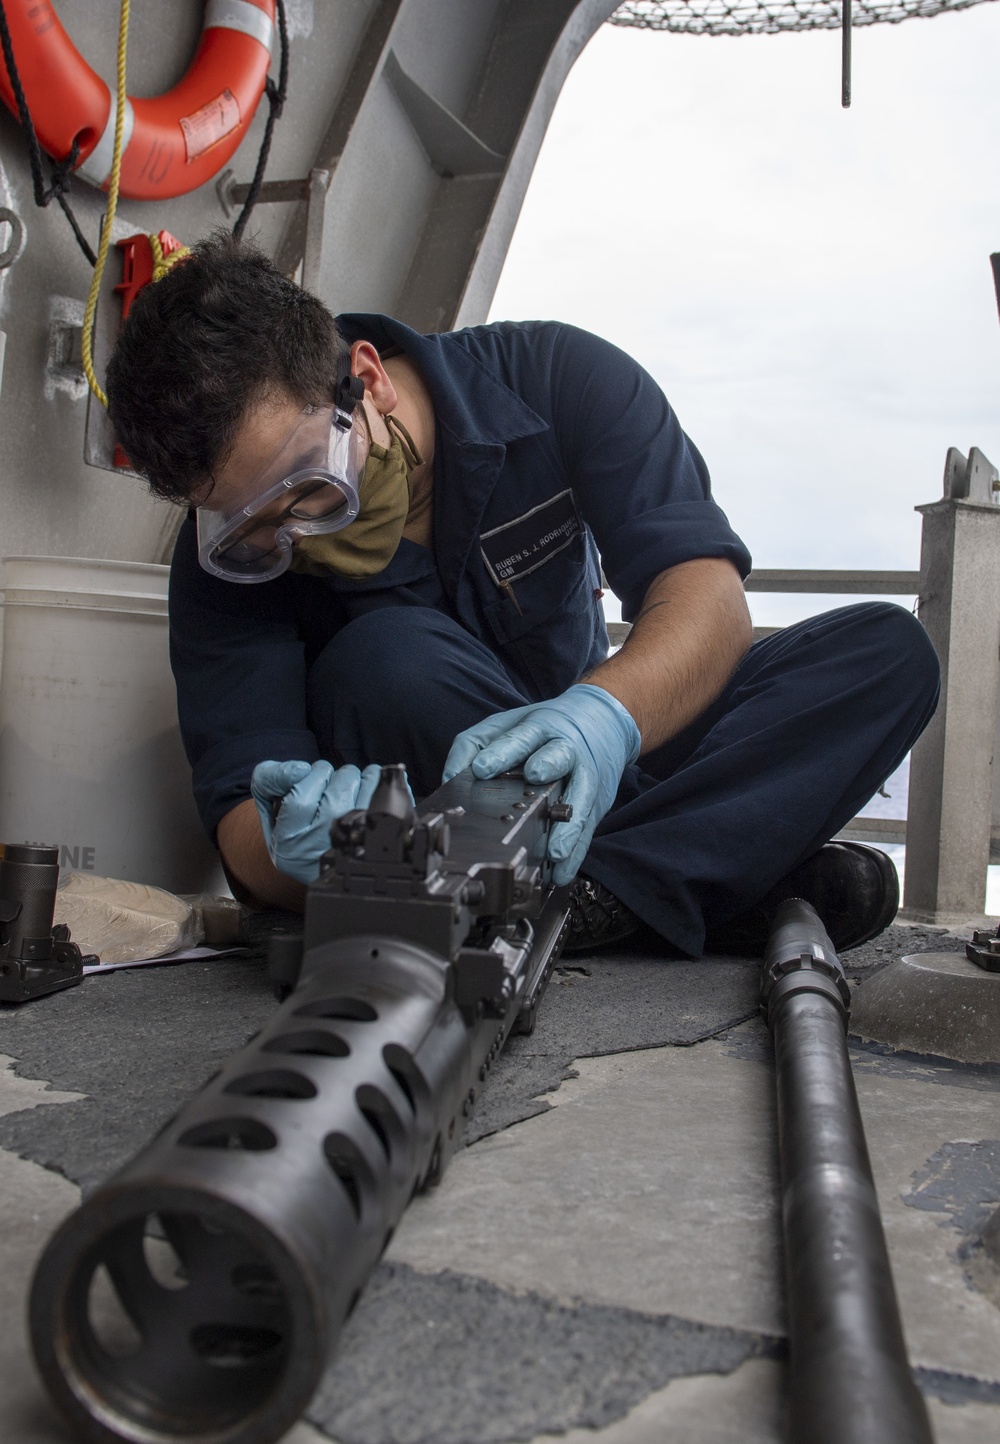 Machine Gun Maintenance aboard USS Jackson (LCS 6)